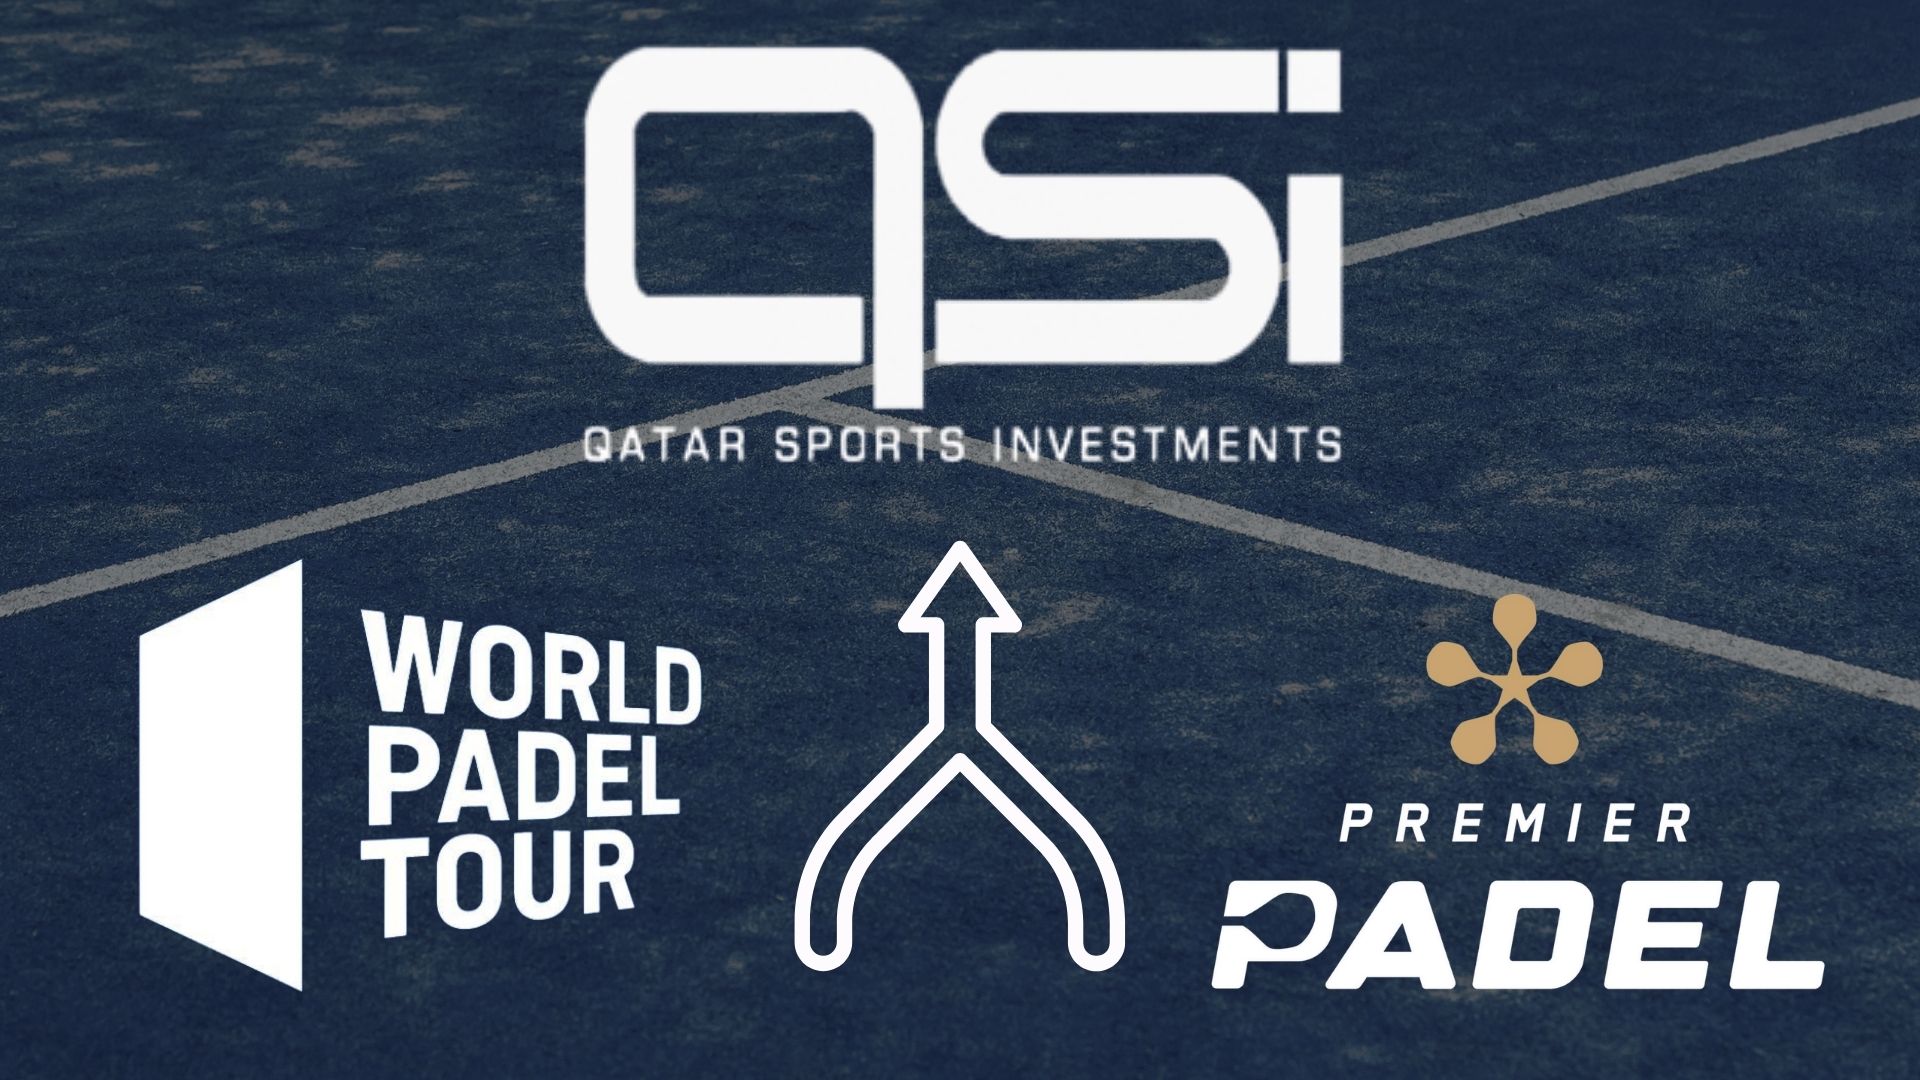 Le World Padel Tour se uniría Premier Padel desde 2023 en QSI